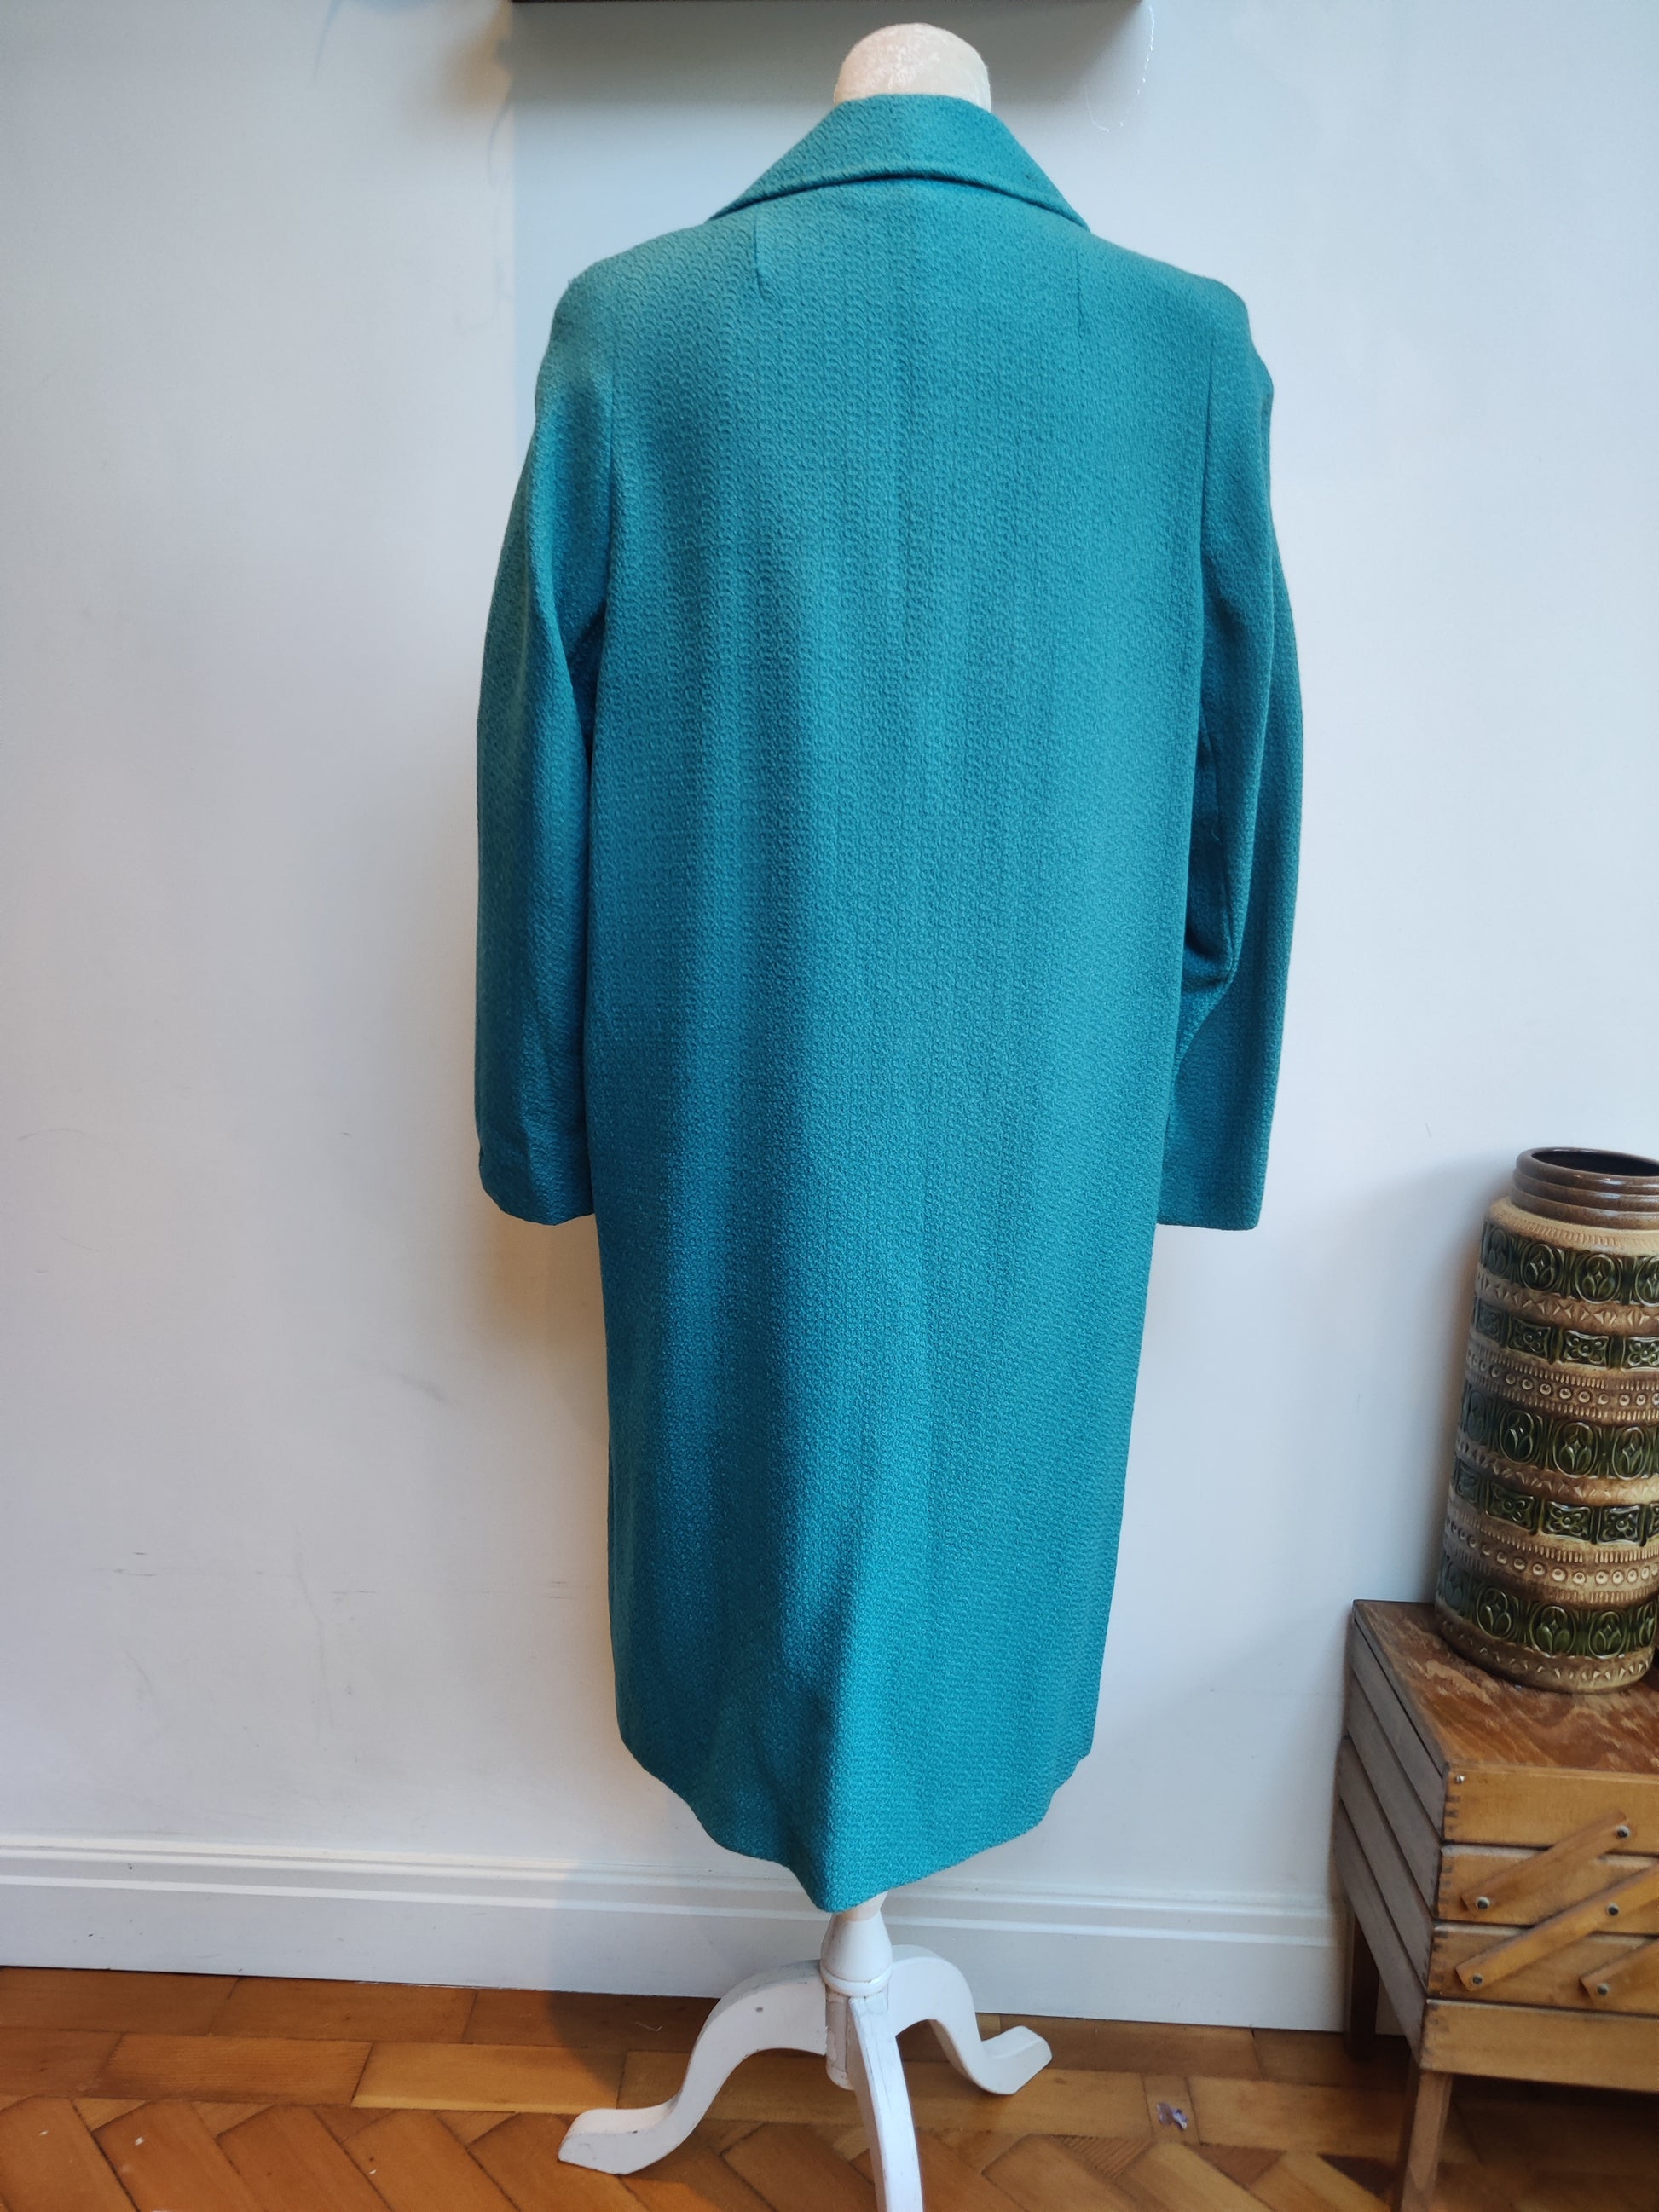 Turquoise vintage coat.